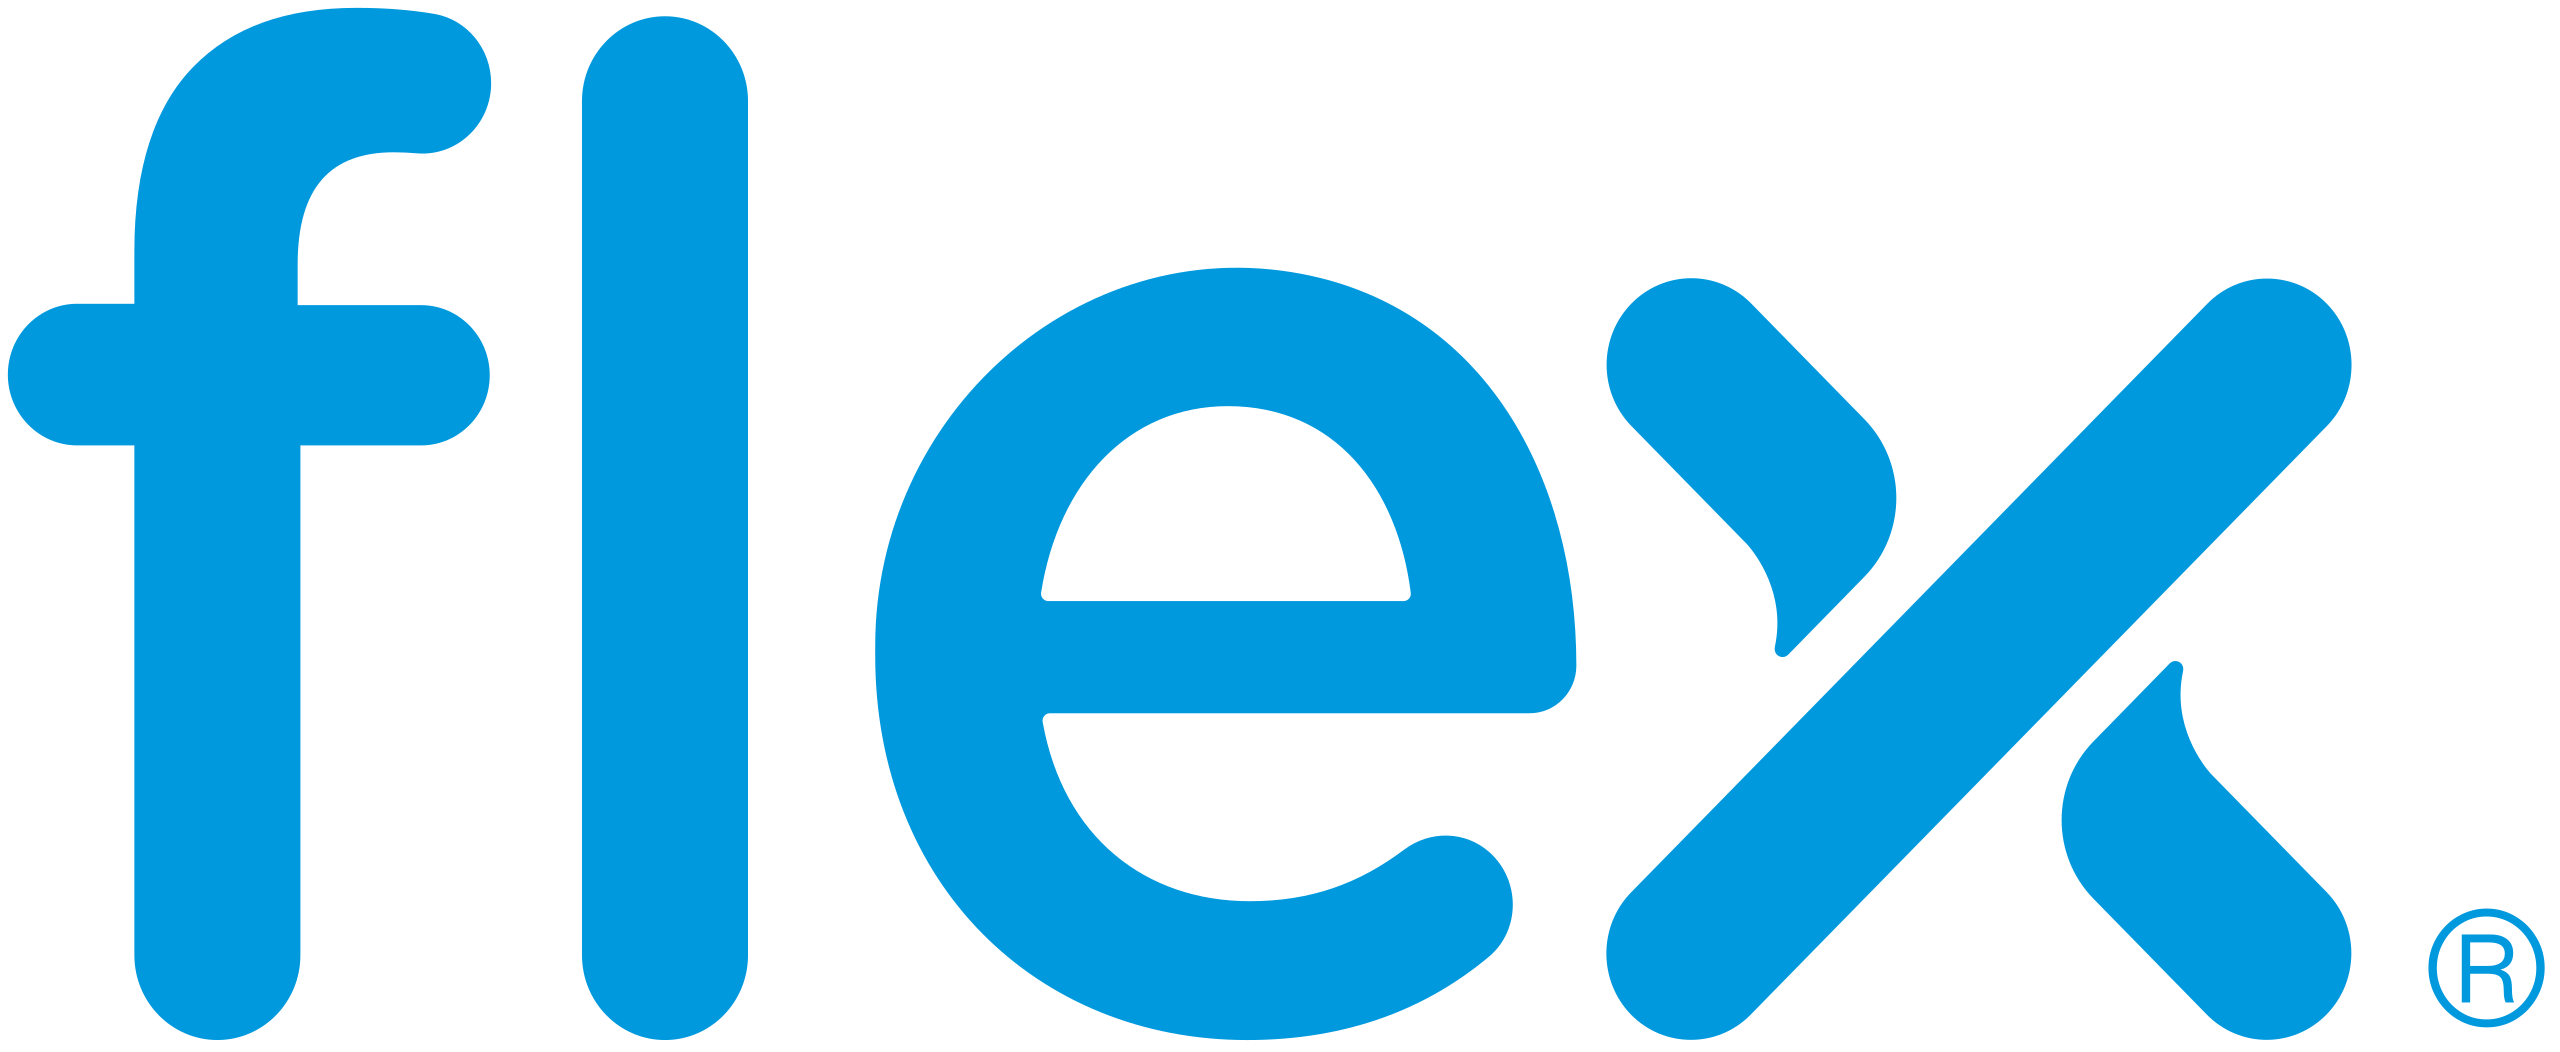 Flex_logo_(2015).svg